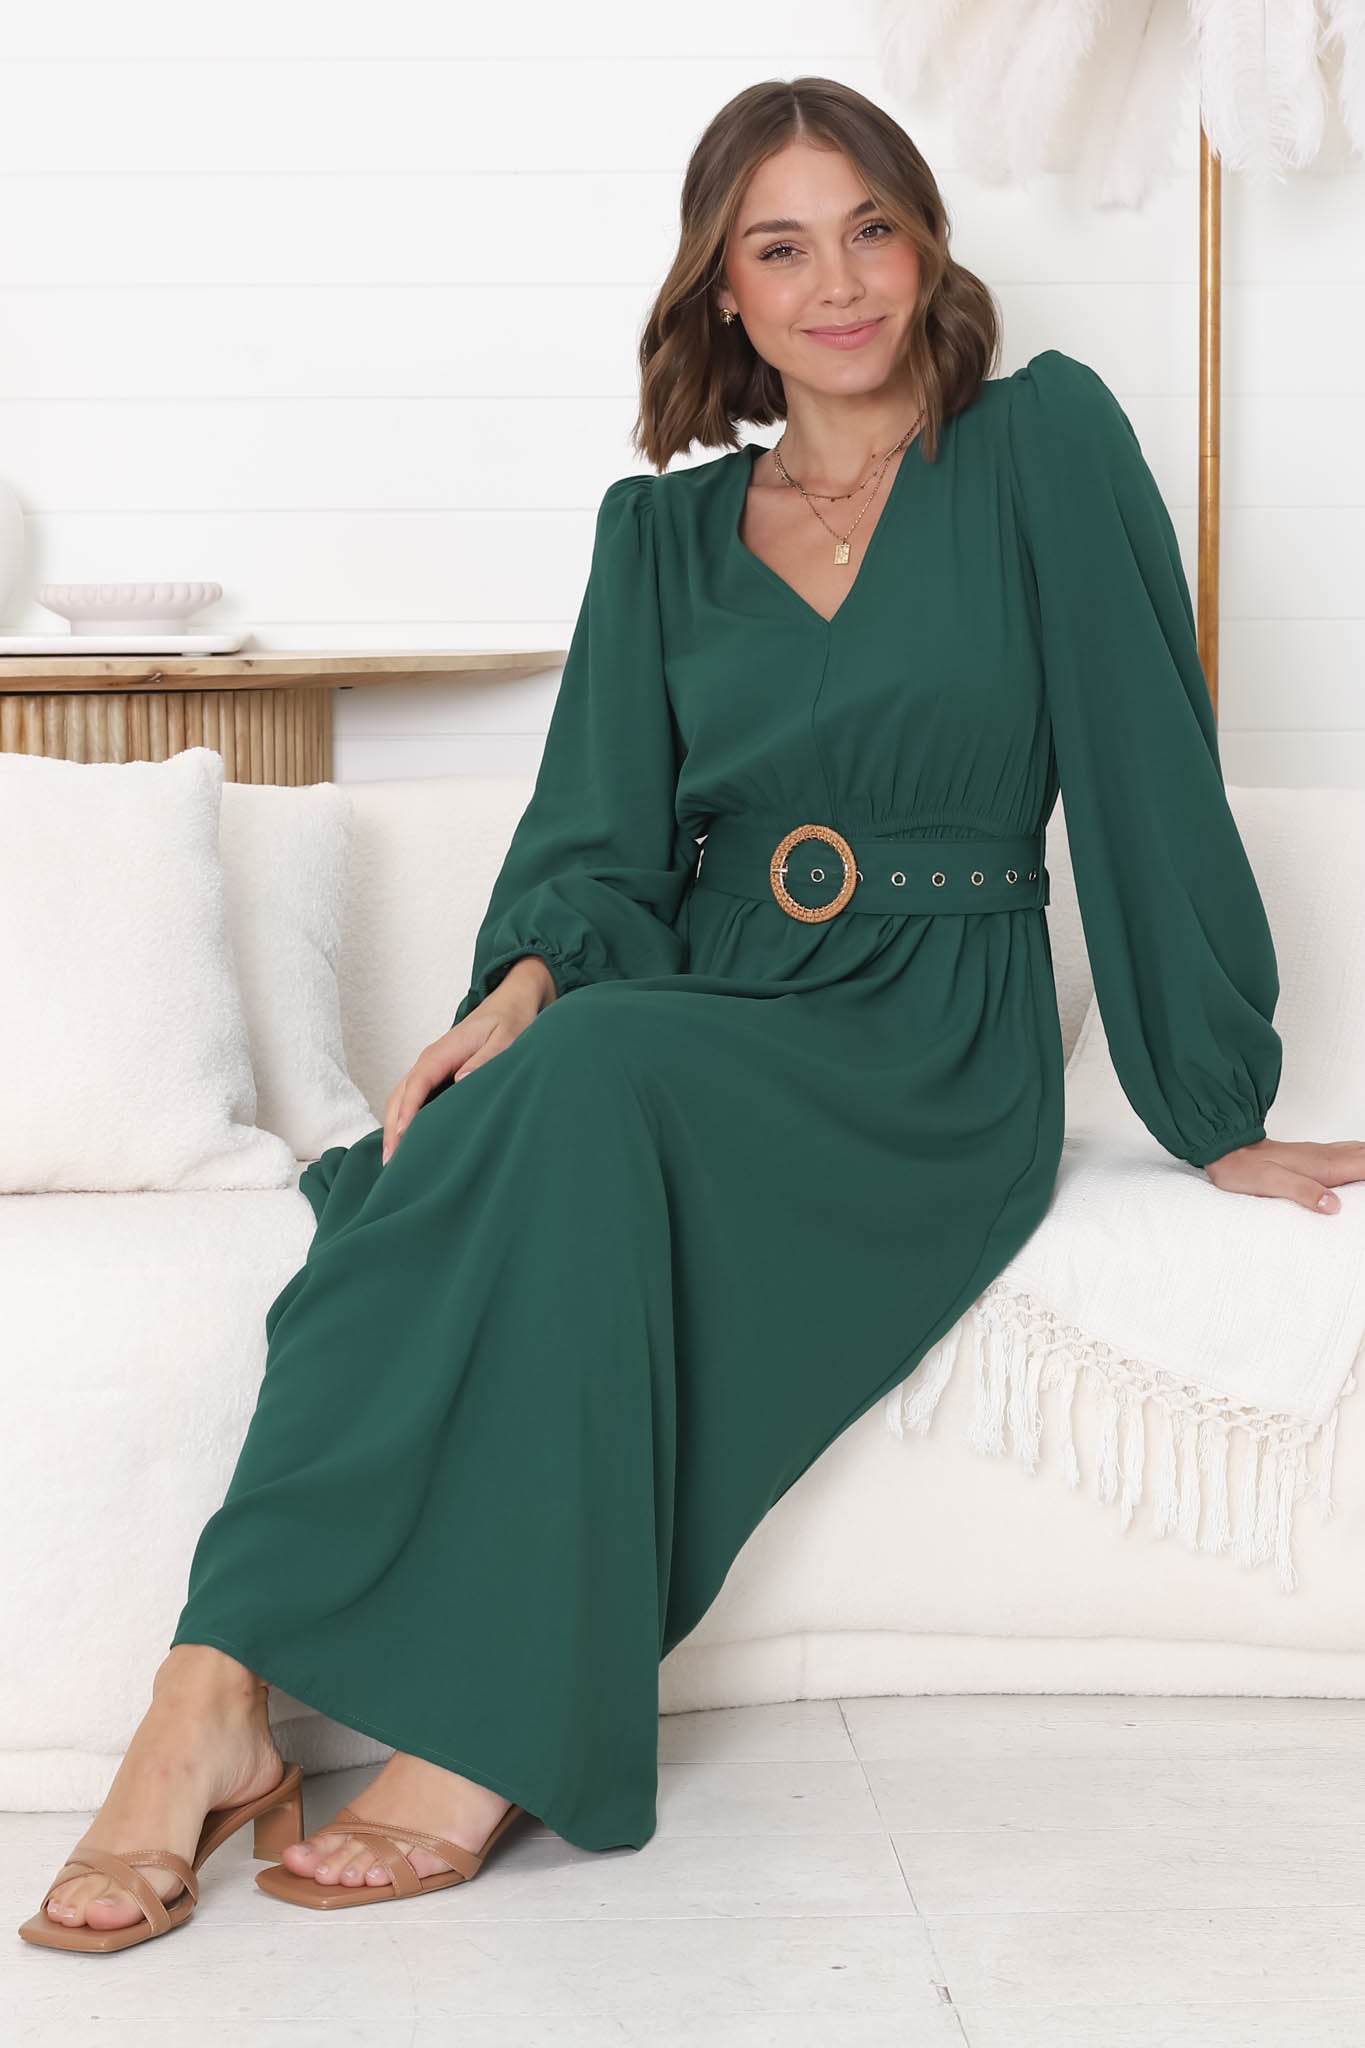 Lyna Midi Dress - A-Line Dress with Statement Rattan Buckle Belt in Emerald